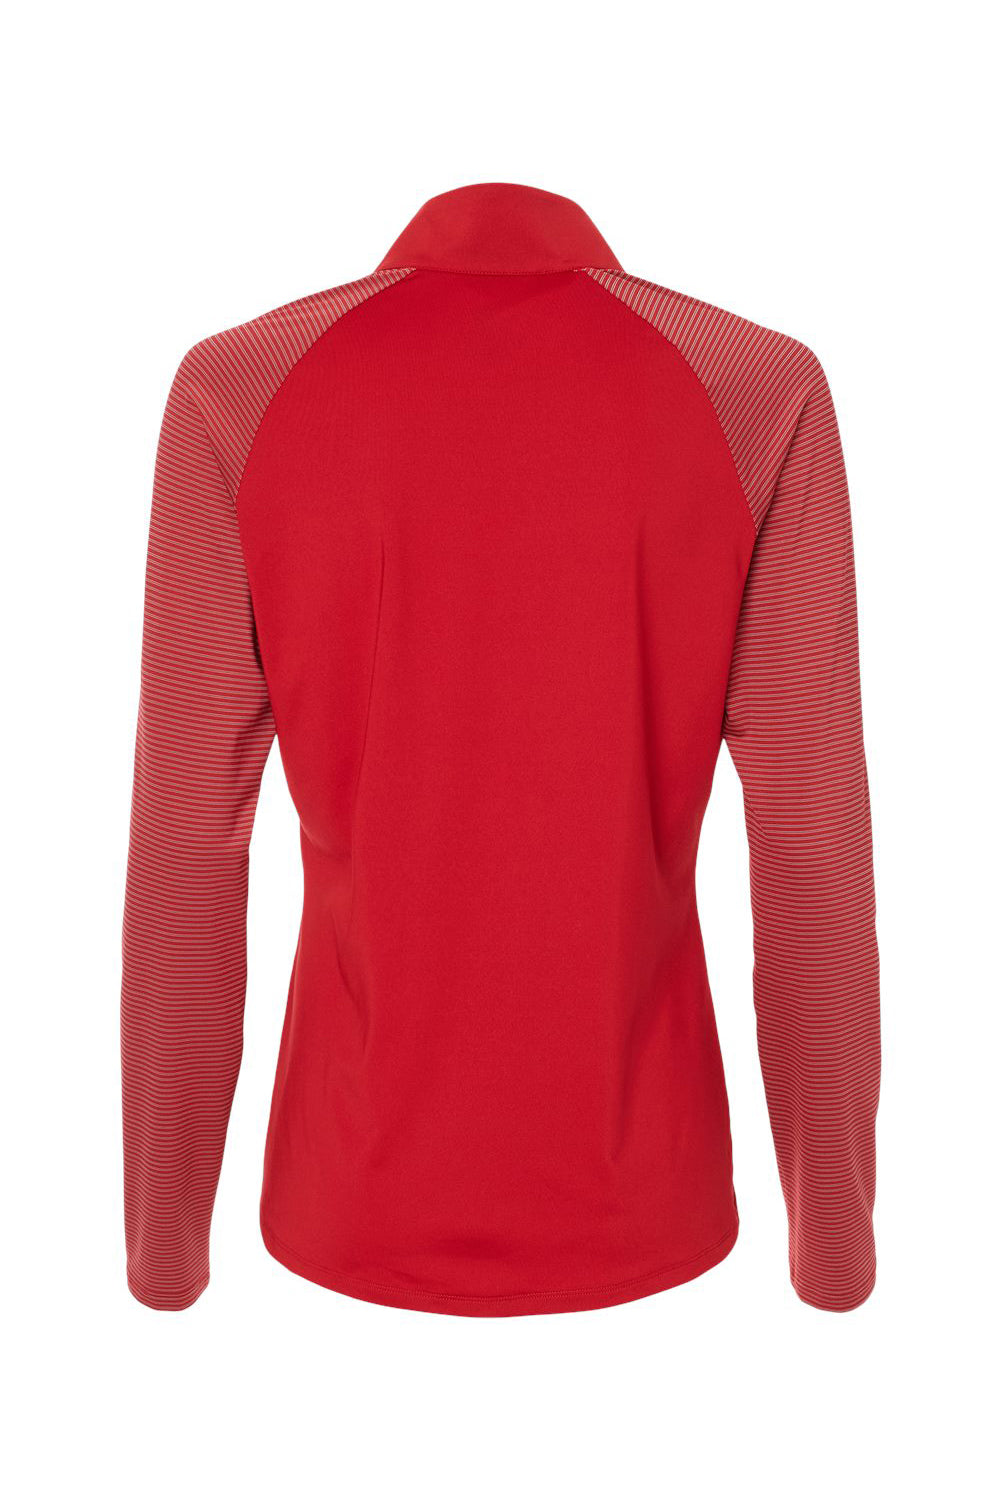 Adidas A521 Womens Stripe Block Moisture Wicking 1/4 Zip Sweatshirt Team Power Red Flat Back